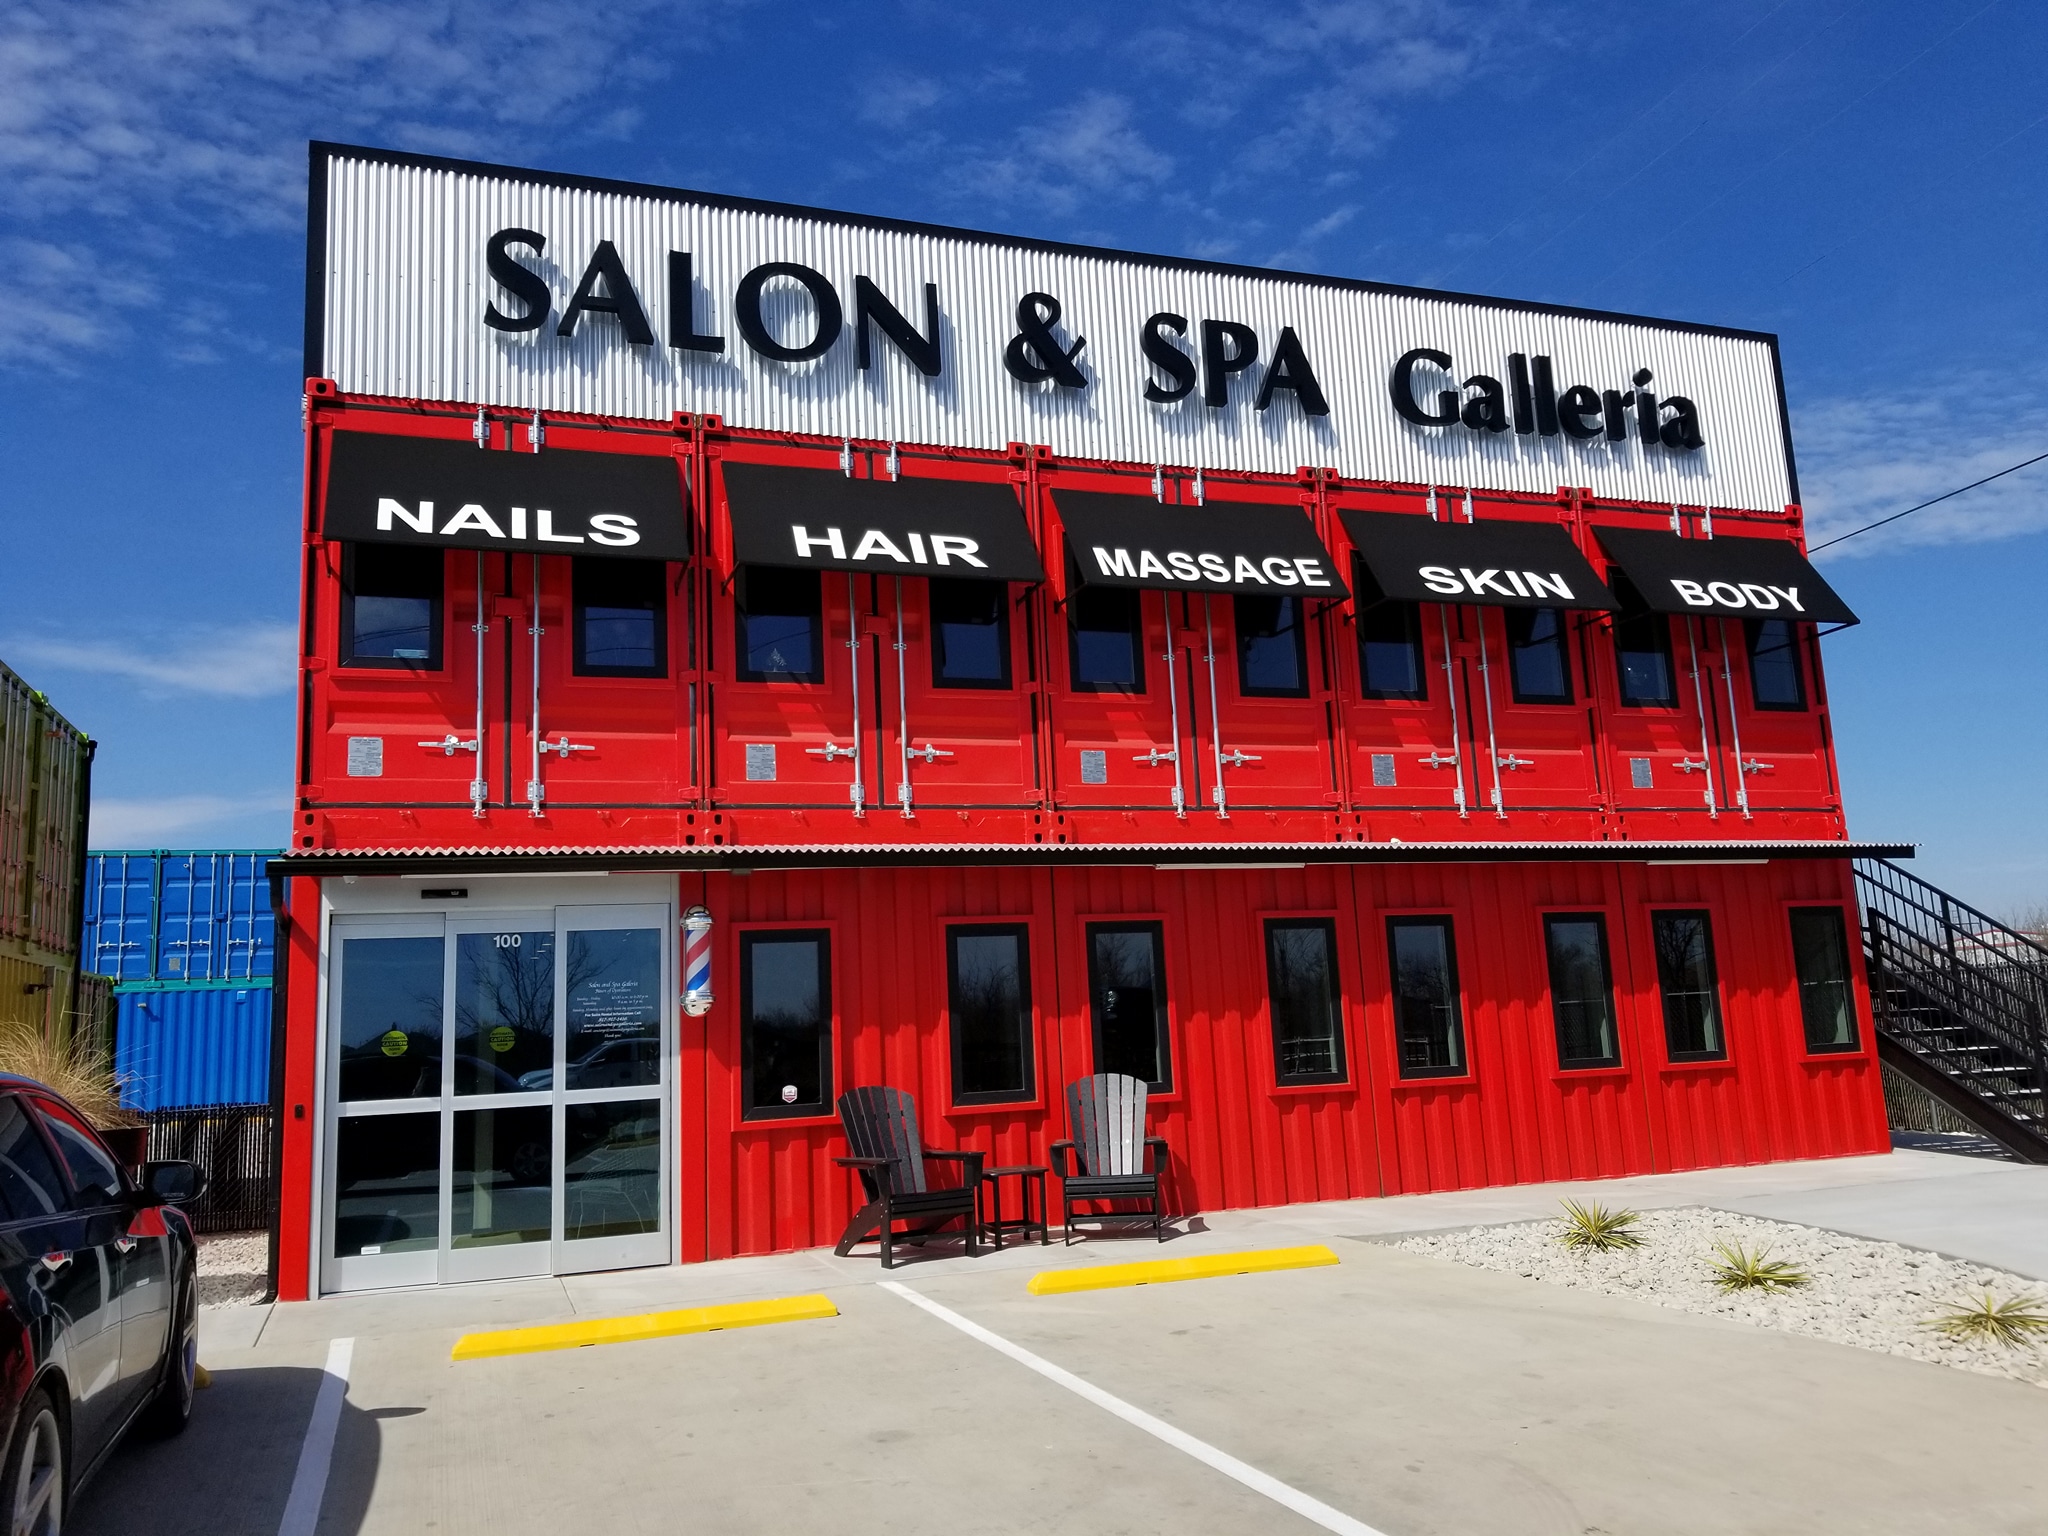 Nail'd It Salon: Glendale, CA | The Americana at Brand